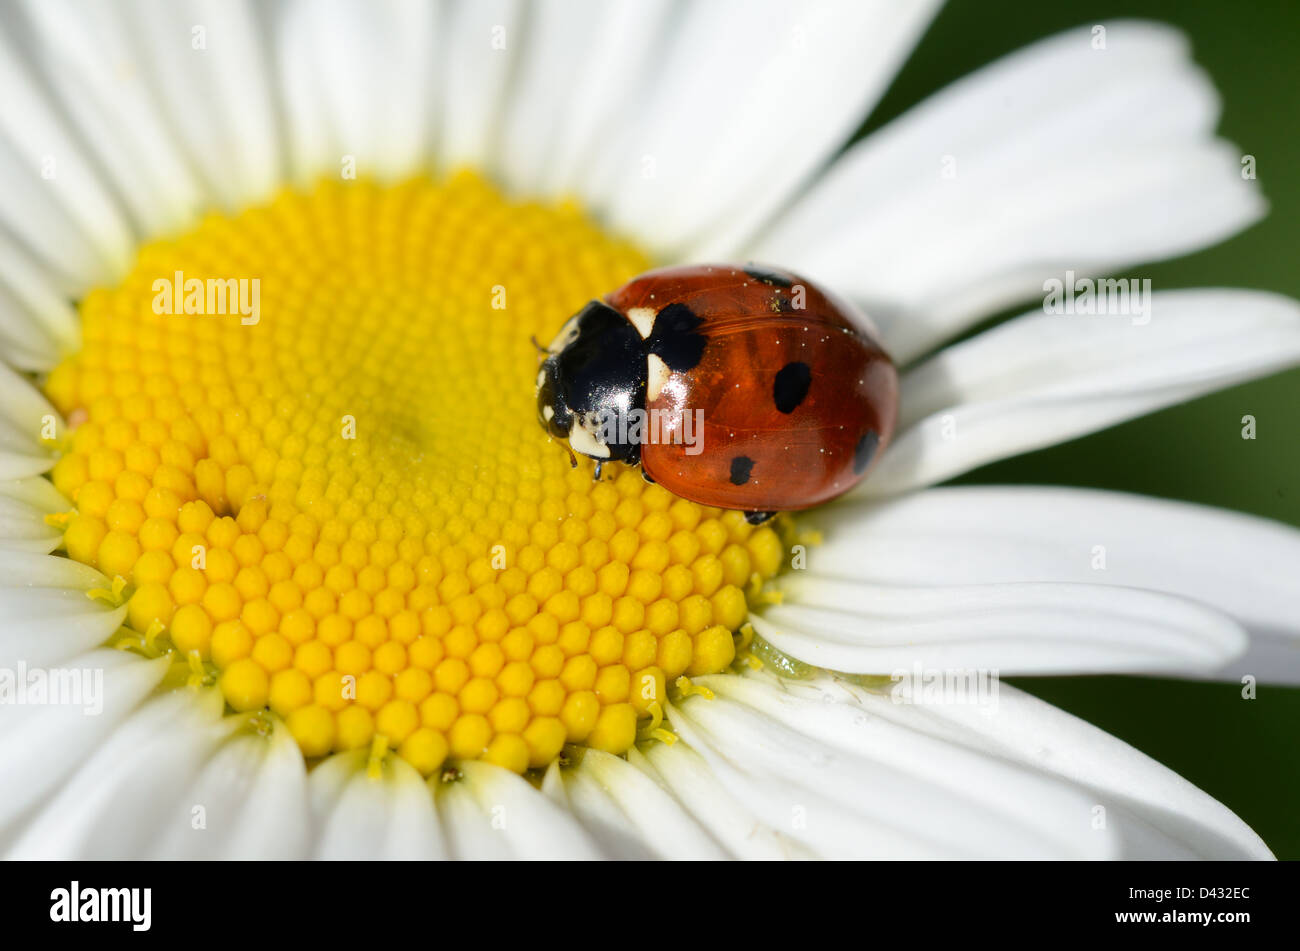 Seven-Spot Ladybird or Seven-Spotted Ladybug, Coccinella septempunctata, on Daisy Flower Stock Photo